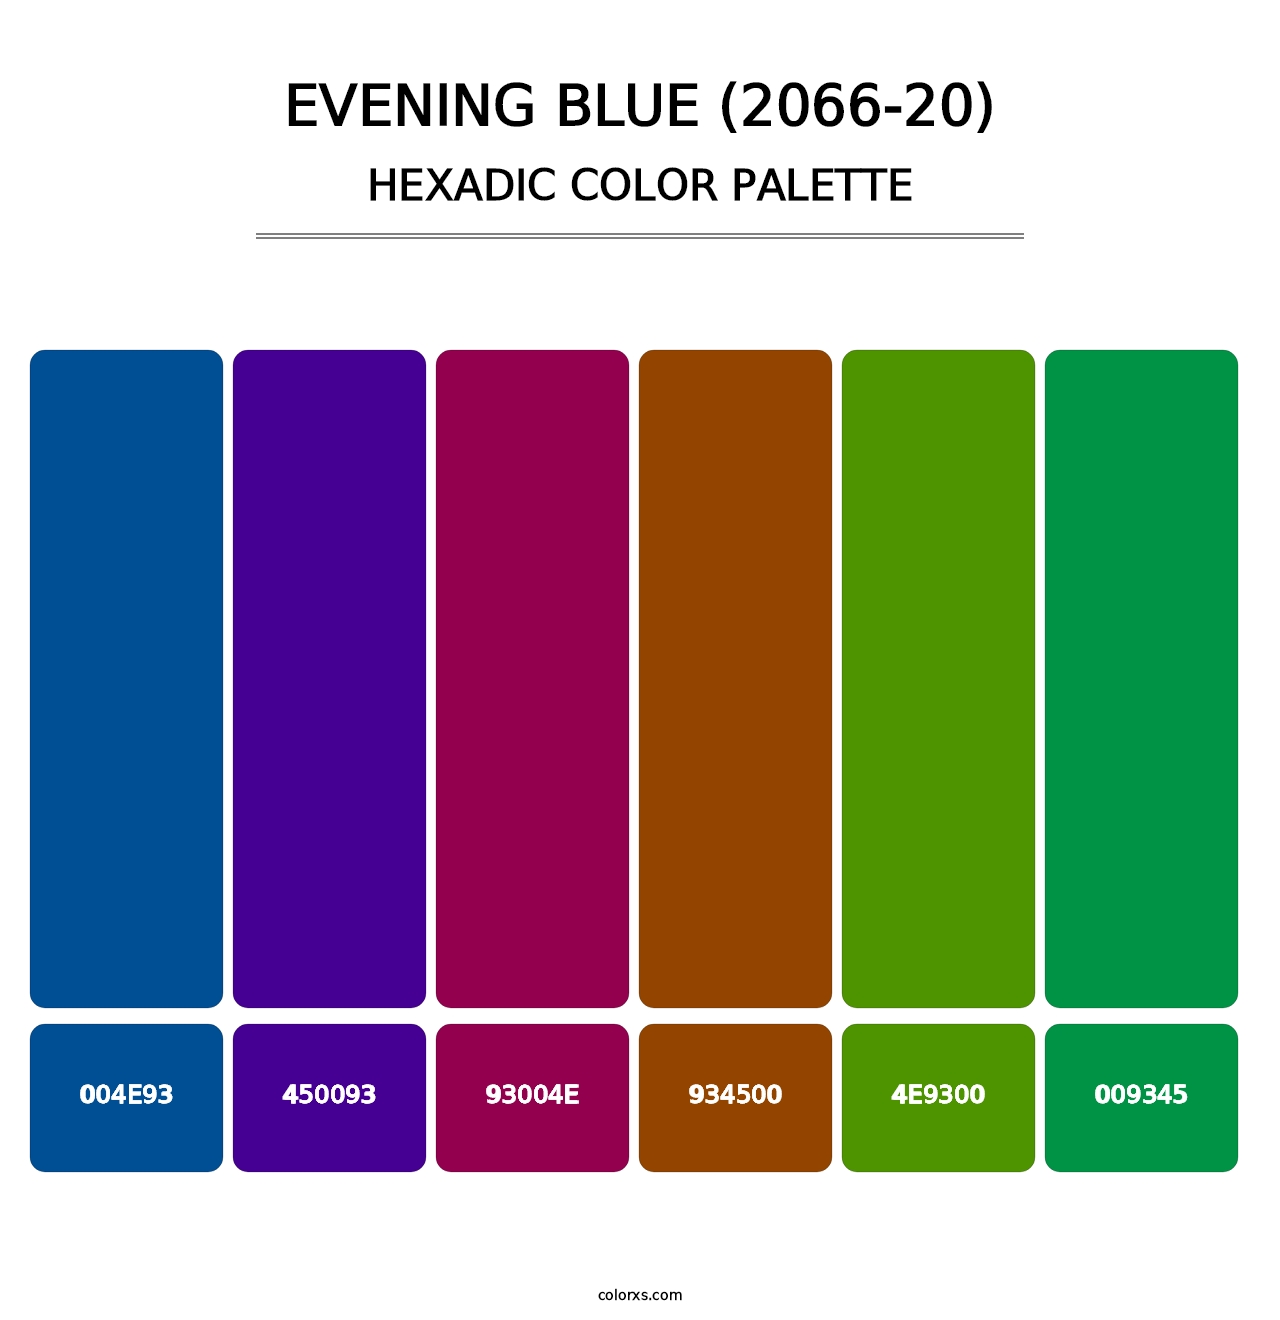 Evening Blue (2066-20) - Hexadic Color Palette